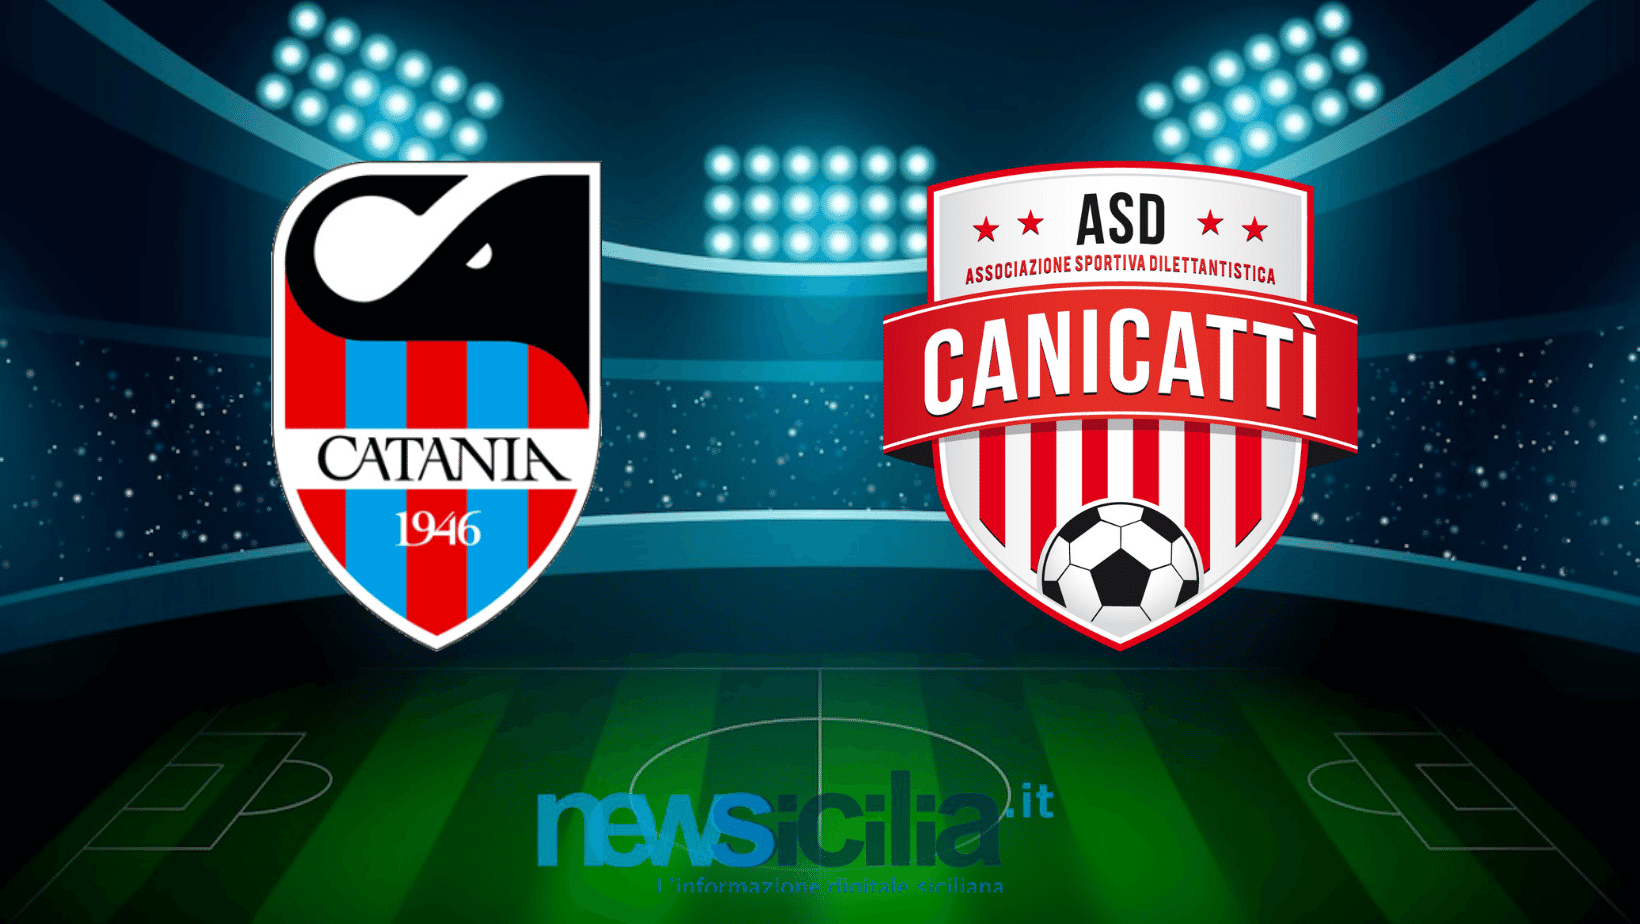 Catania – Canicattì 3 – 0: una vittoria che vale un più dieci in classifica.